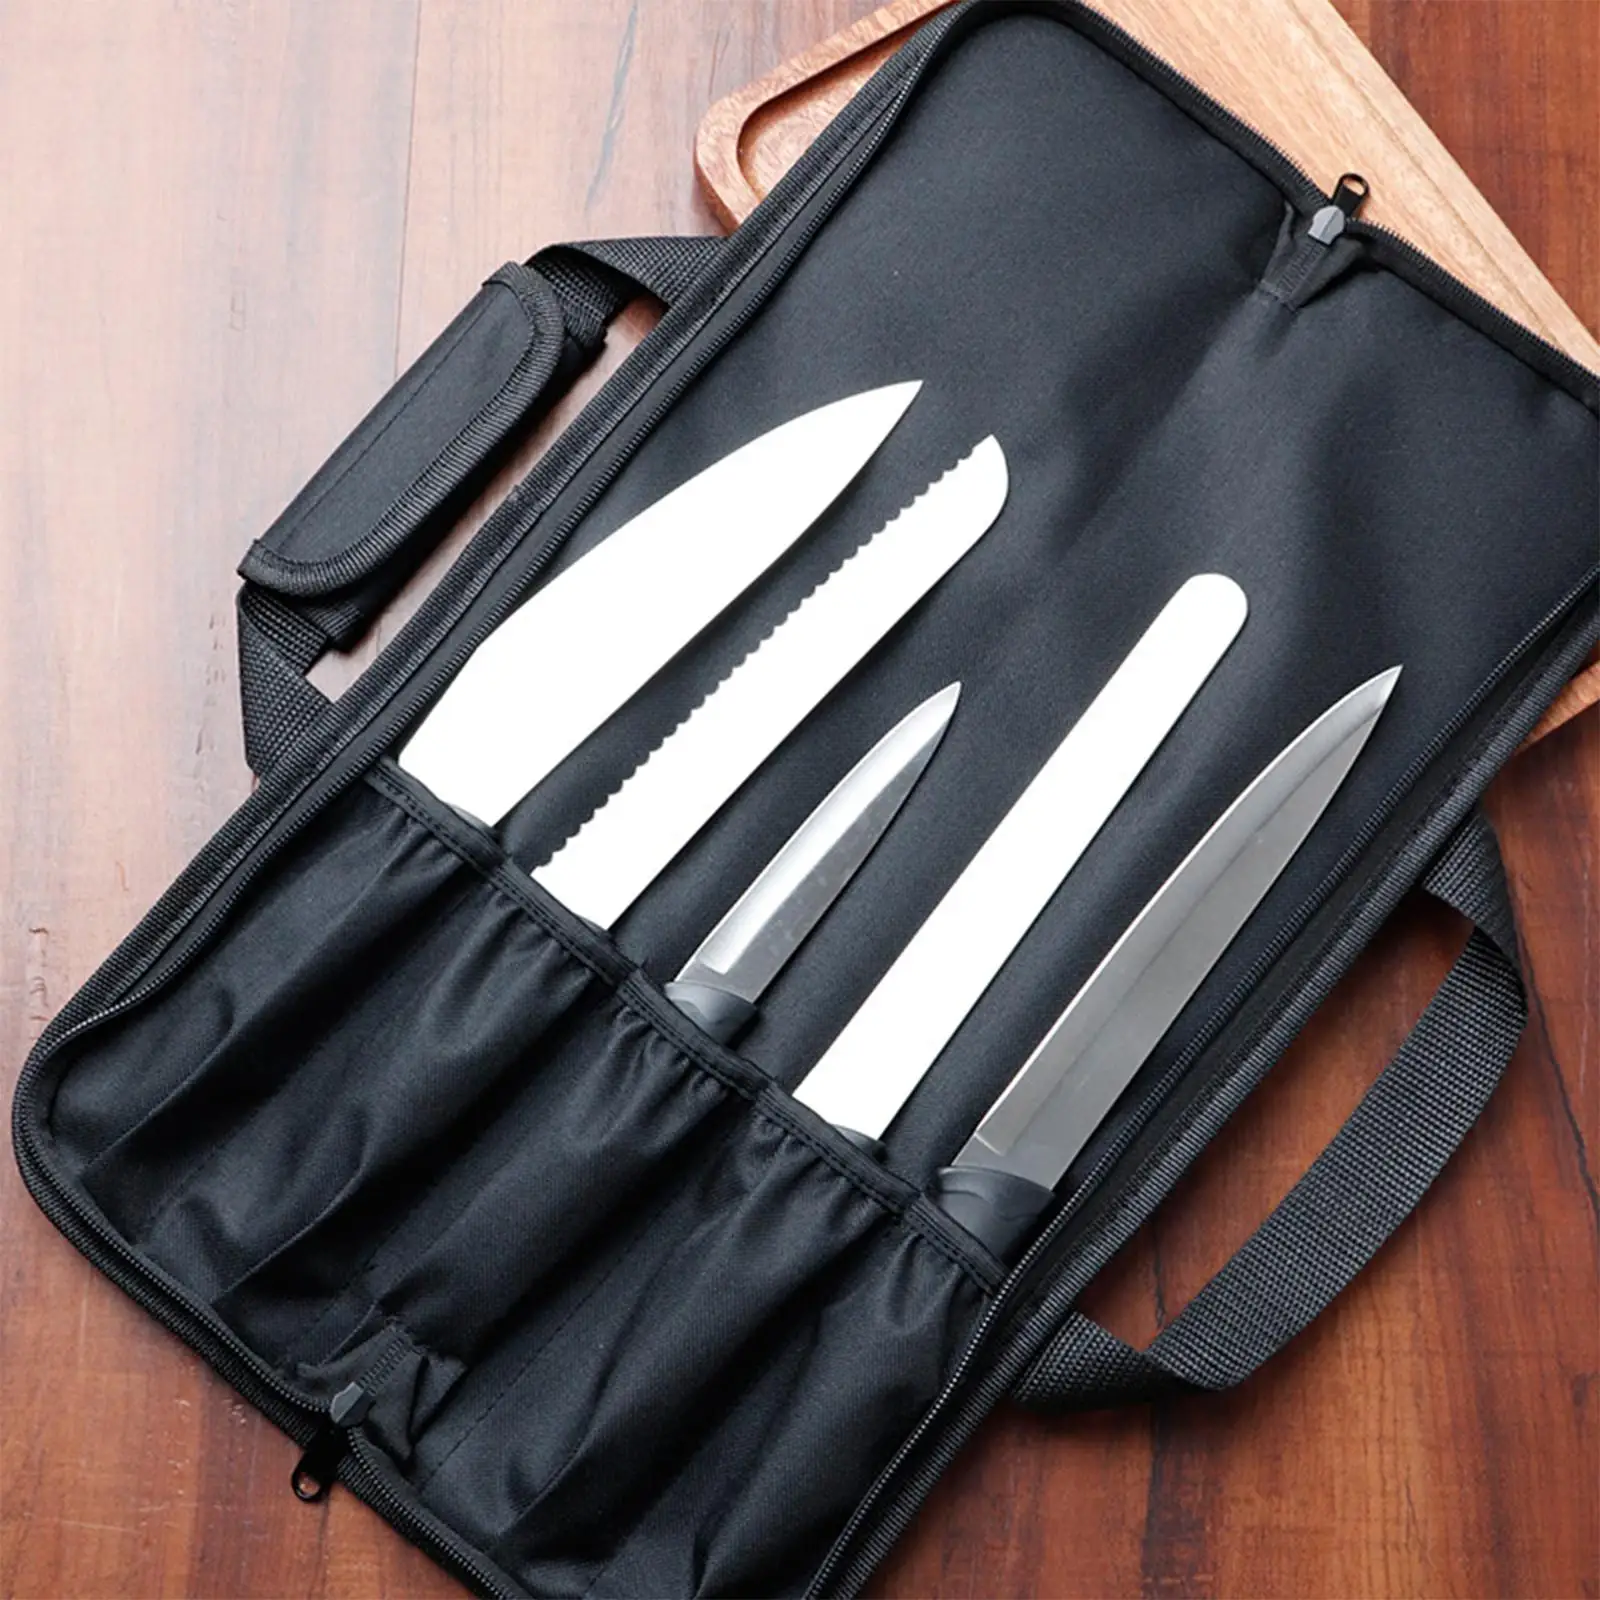 Portable Chef Knife Bag 5 Knife Slots Knife Case Carry Case Bag Knife Tool Bag Chef Knife Case for BBQ Picnic Home Travel